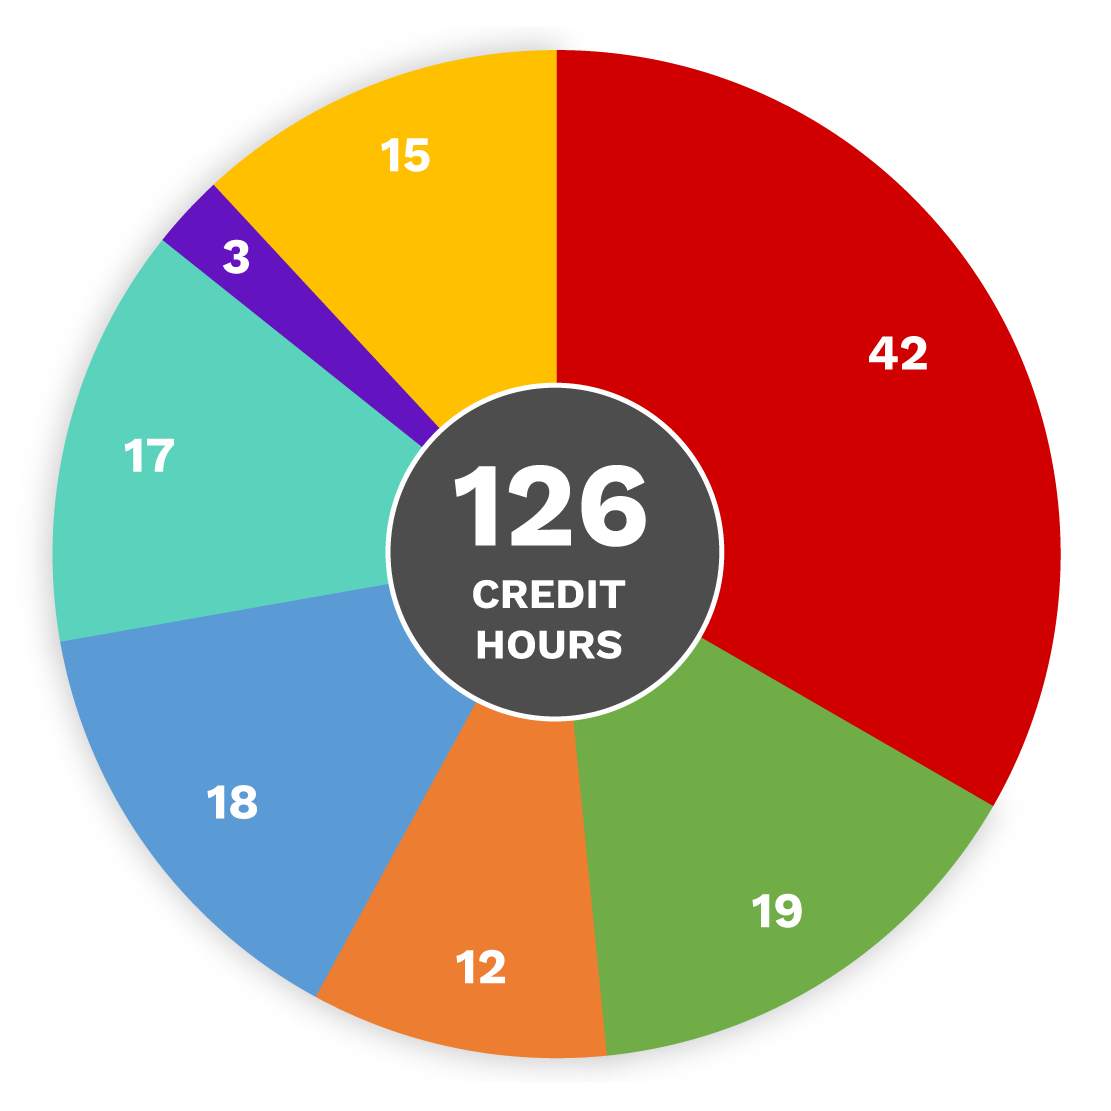 Computer Engineering Credit Hours Per Major Circle Graph